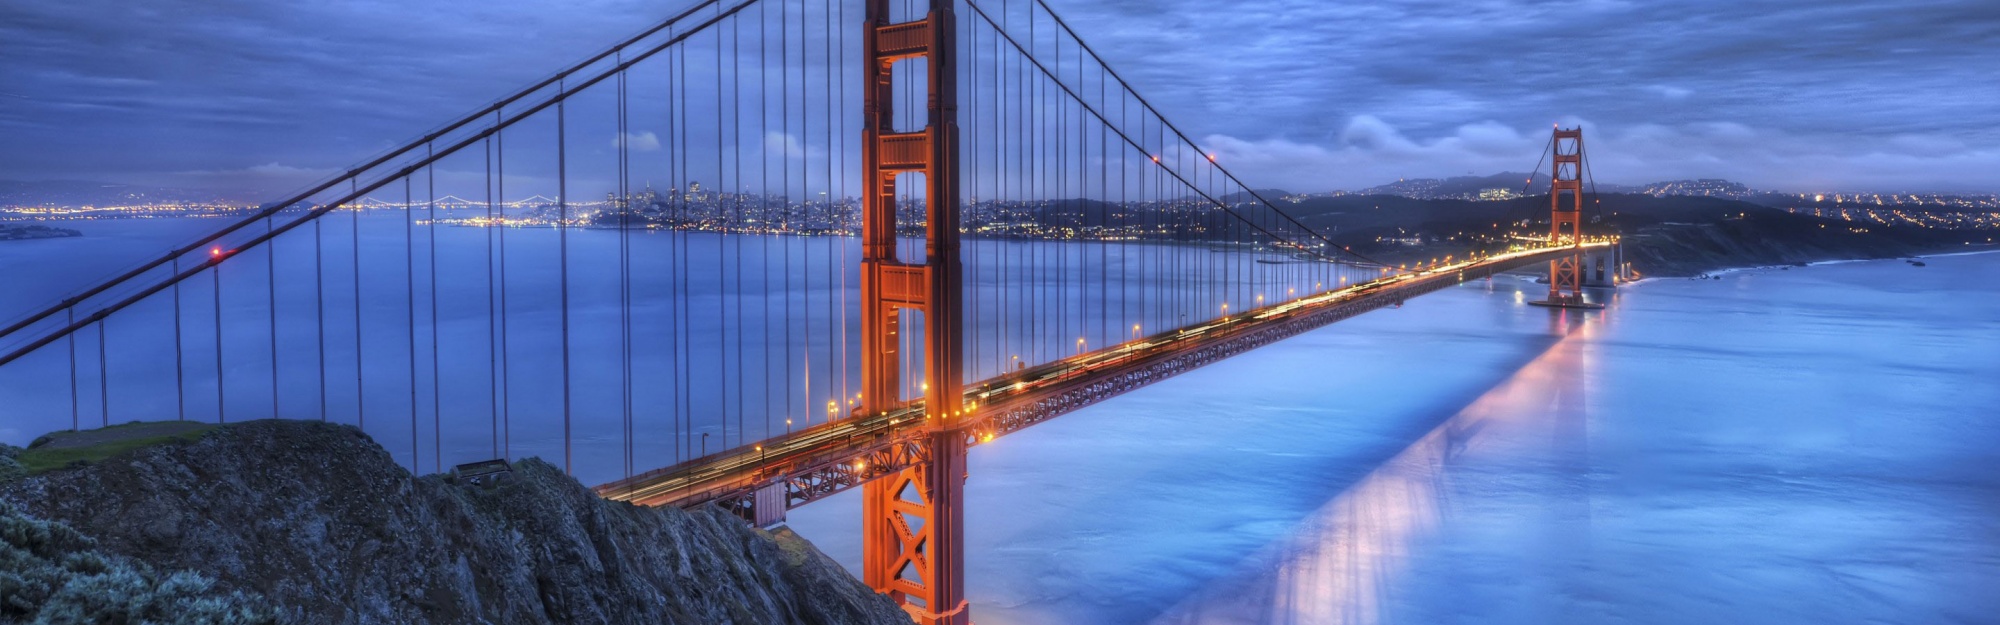 Golden Gate Bridge At Night